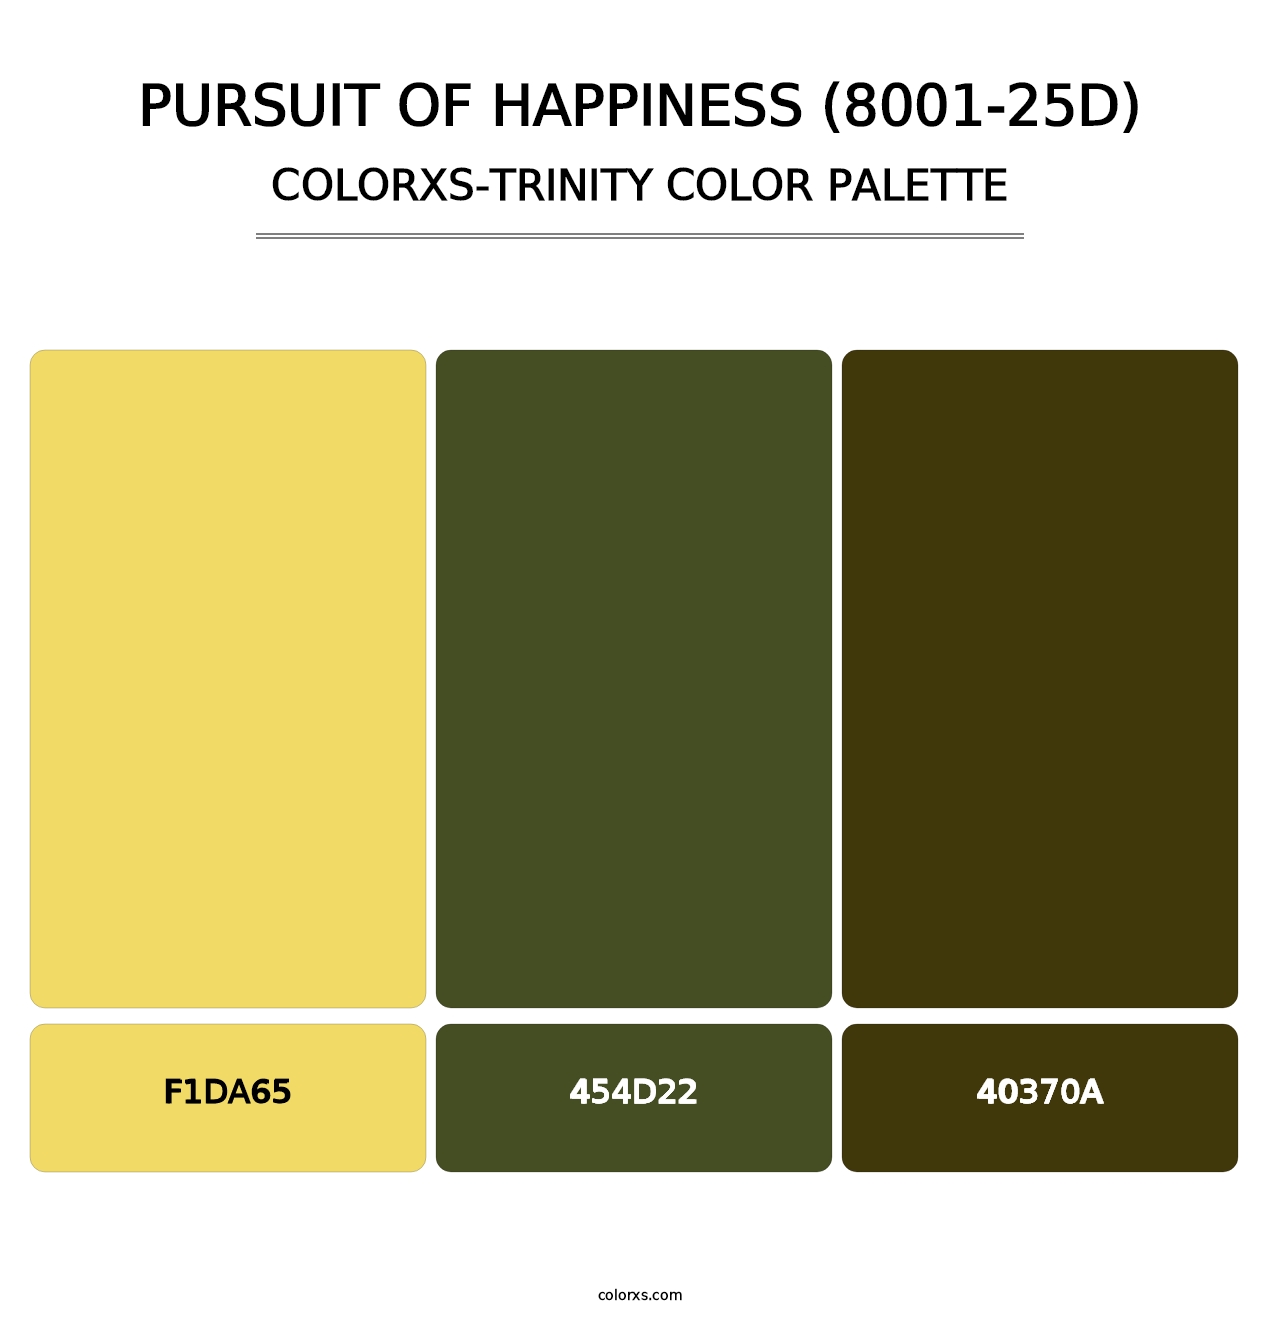 Pursuit of Happiness (8001-25D) - Colorxs Trinity Palette